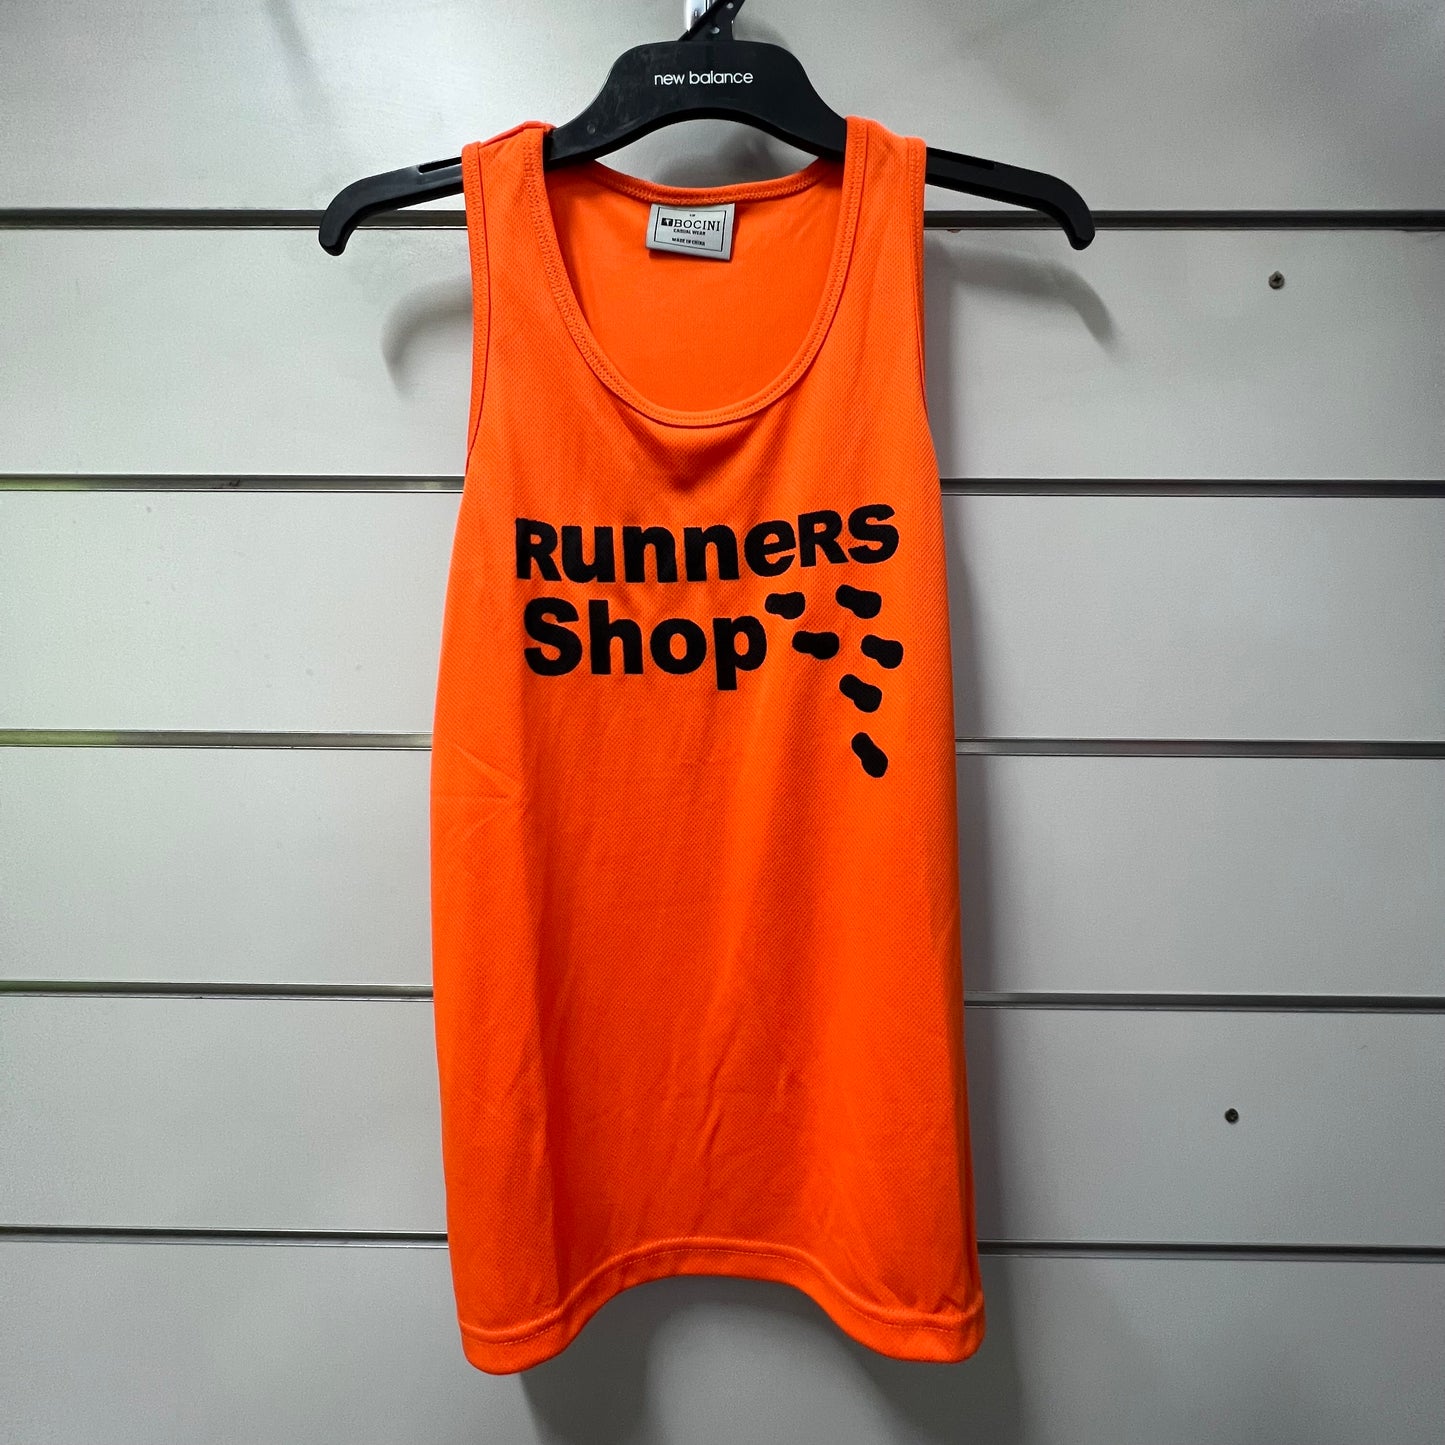 Runners Shop Singlet (Unisex 6-16)